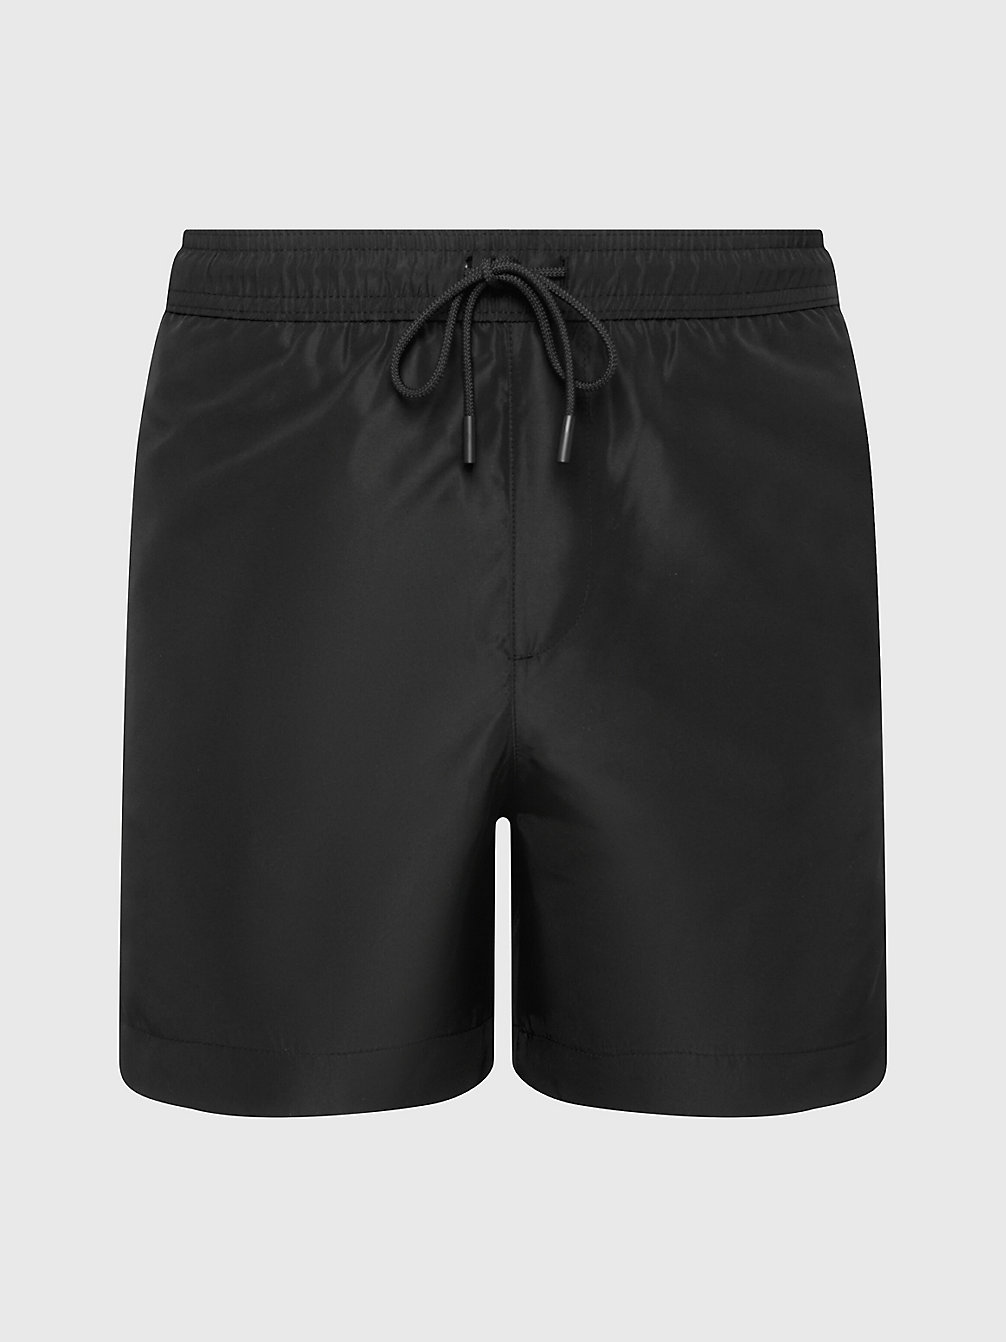 PVH BLACK Medium Drawstring Swim Shorts - Core Logo undefined men Calvin Klein